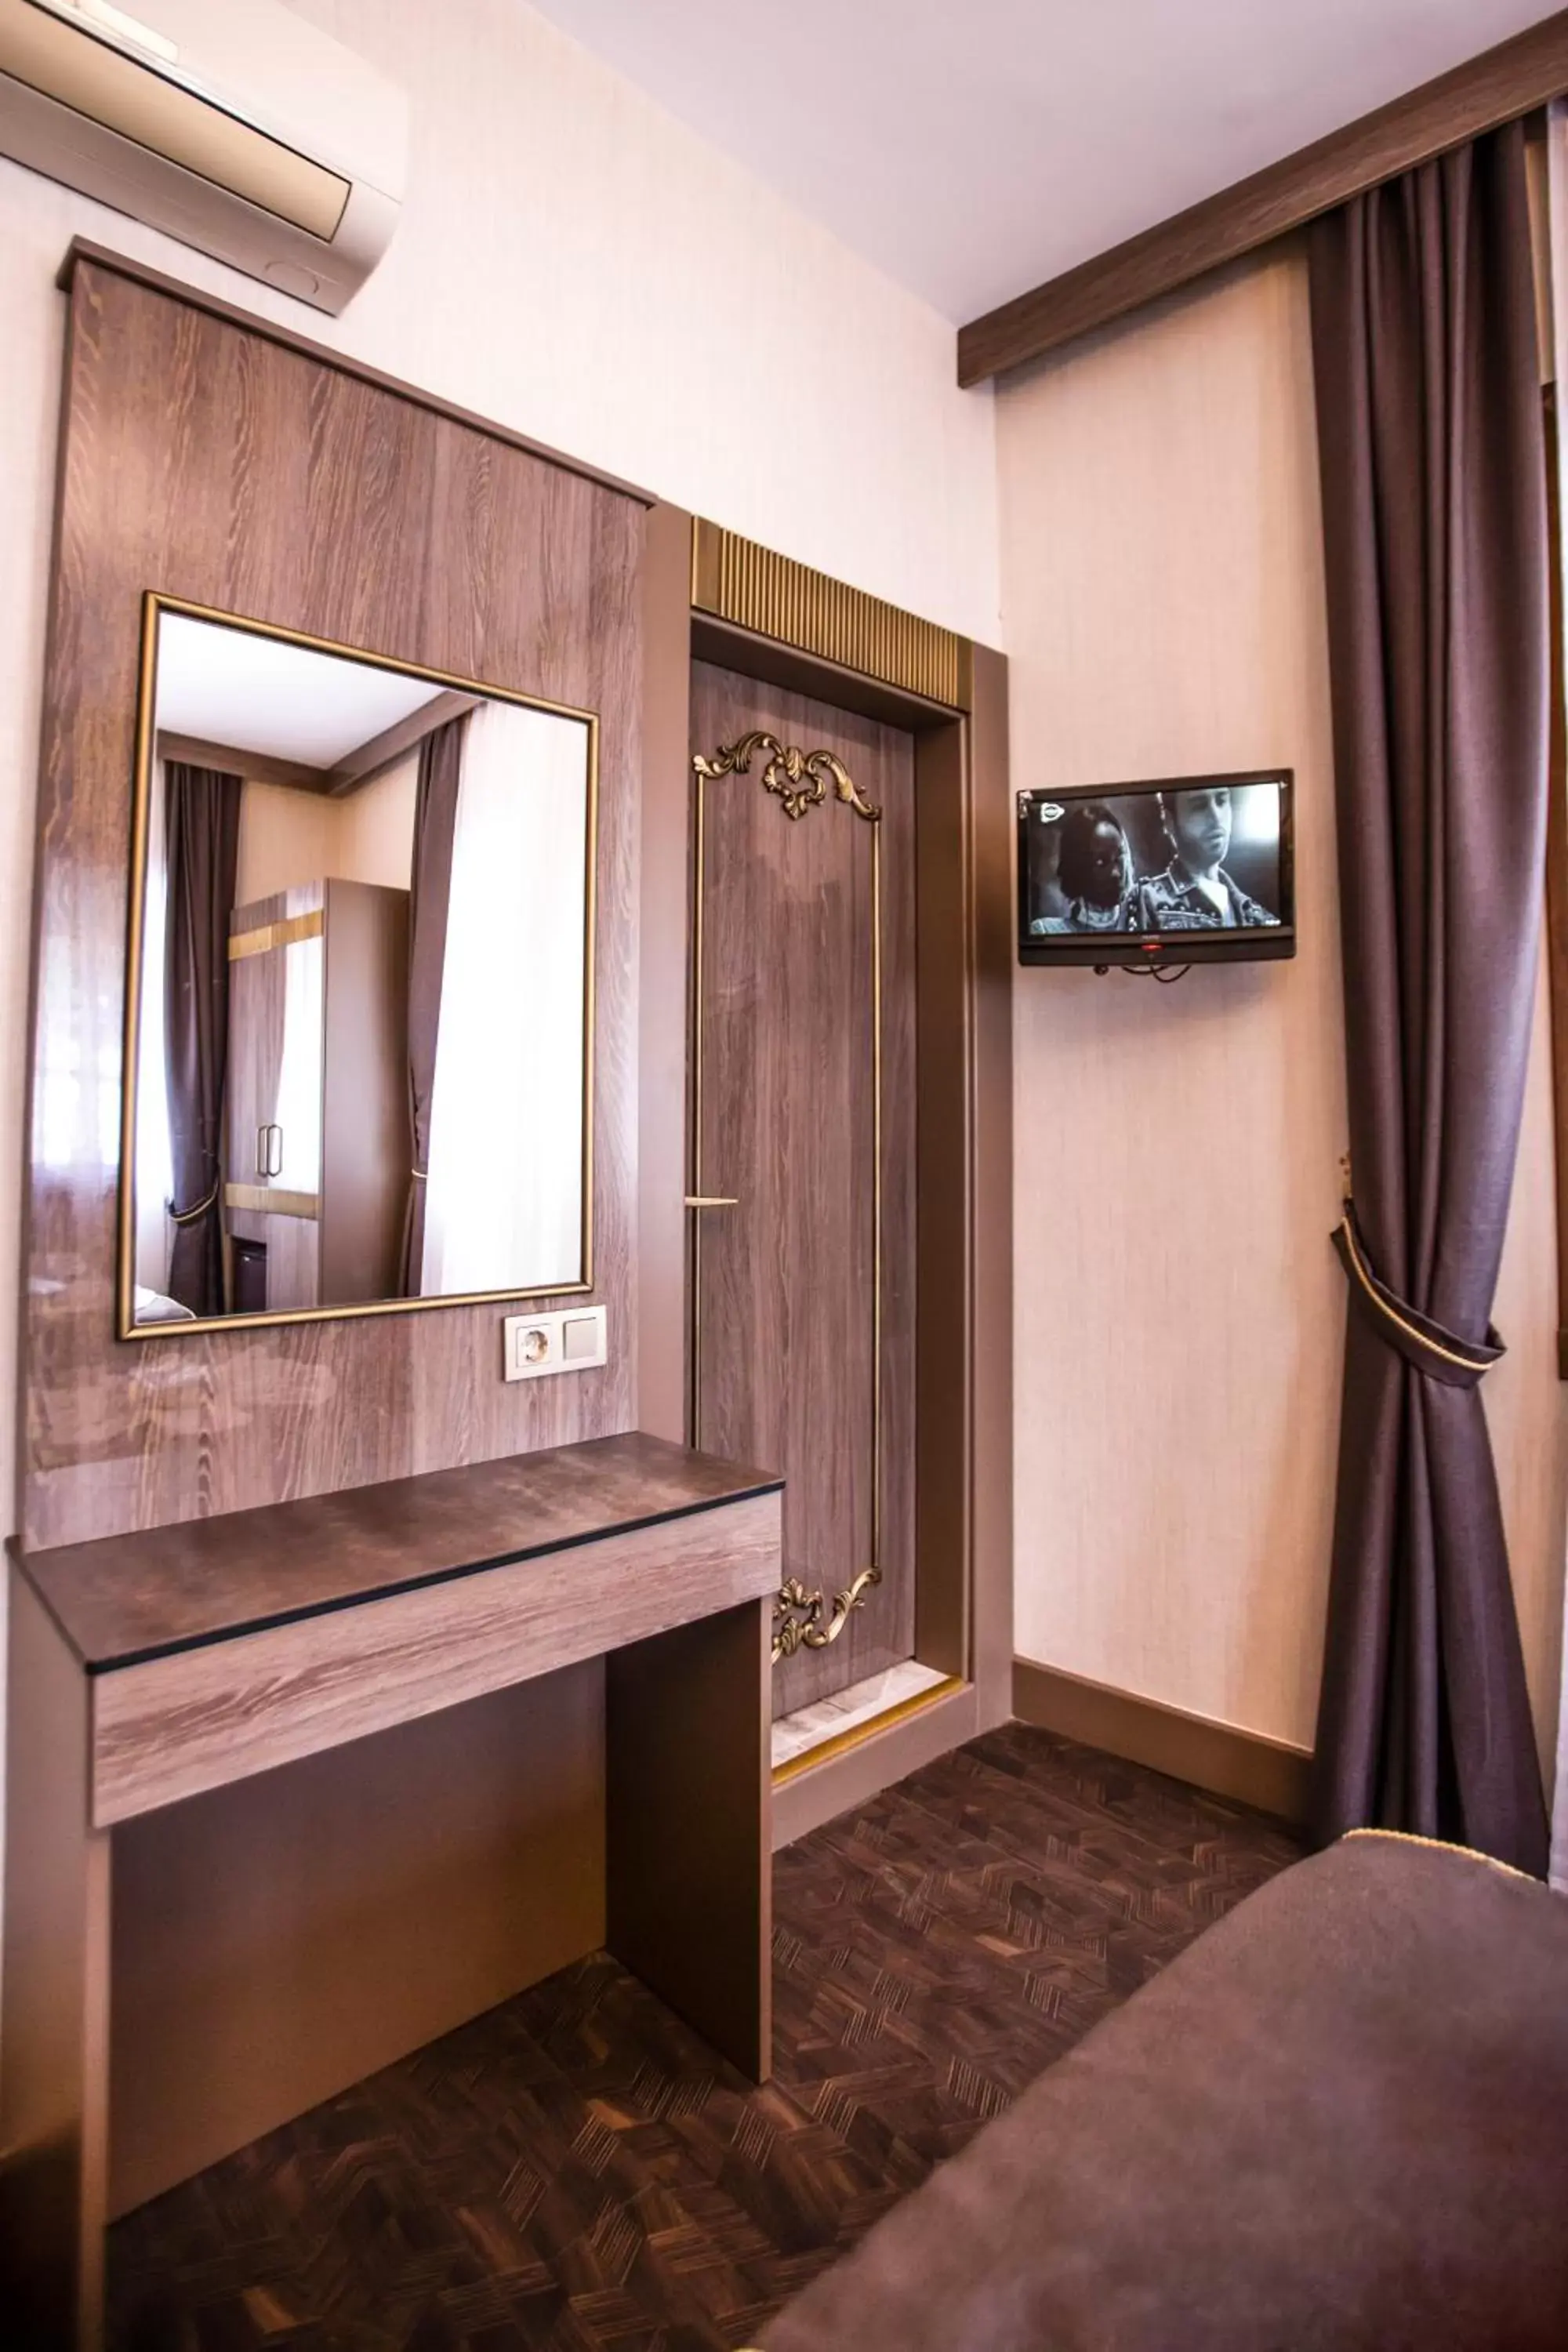 Area and facilities, Bathroom in Dara Old City Hotel